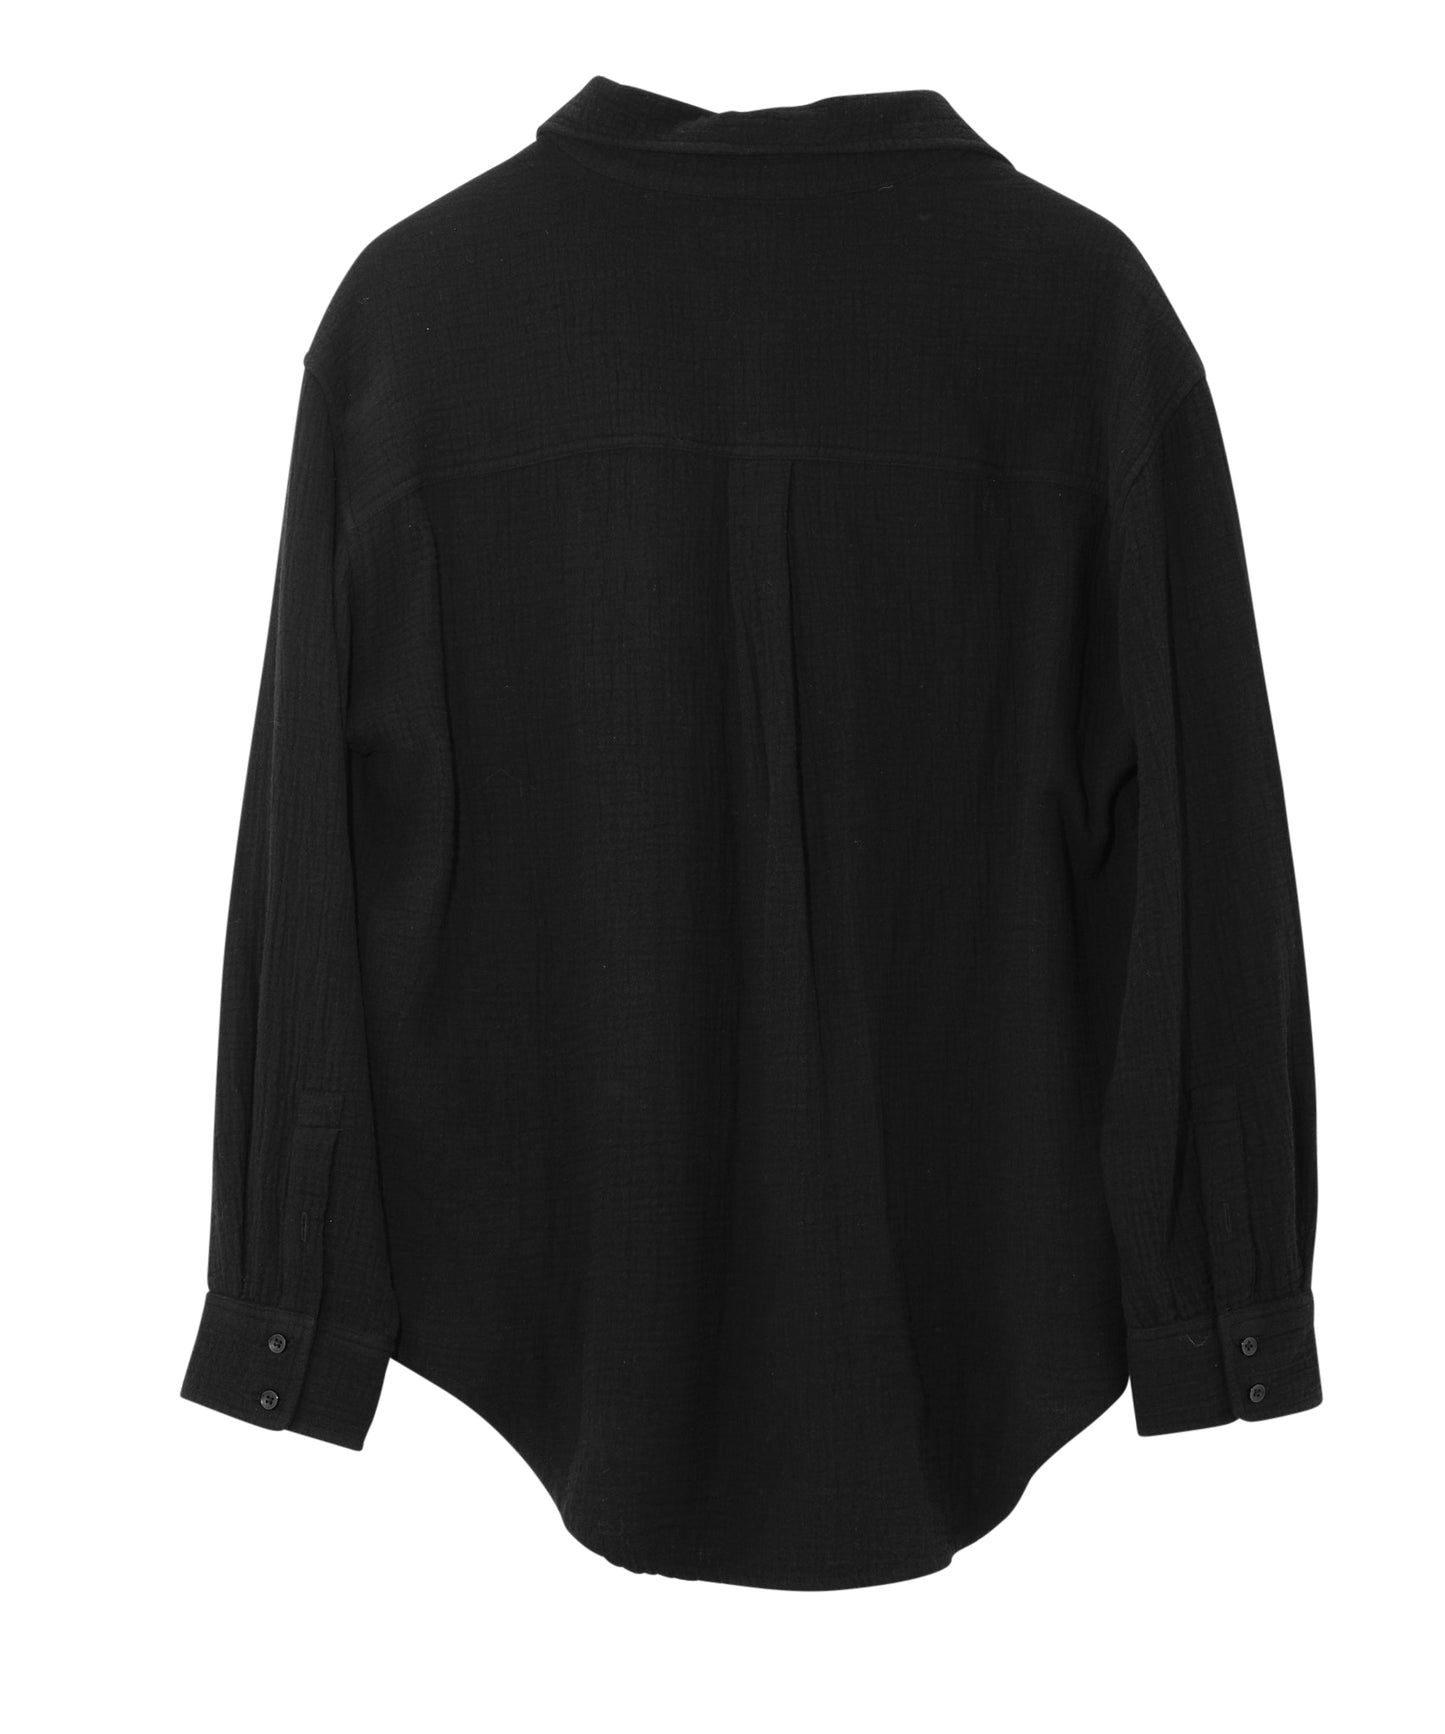 Supersoft Gauze Boyfriend Shirt in color black - back of garment.